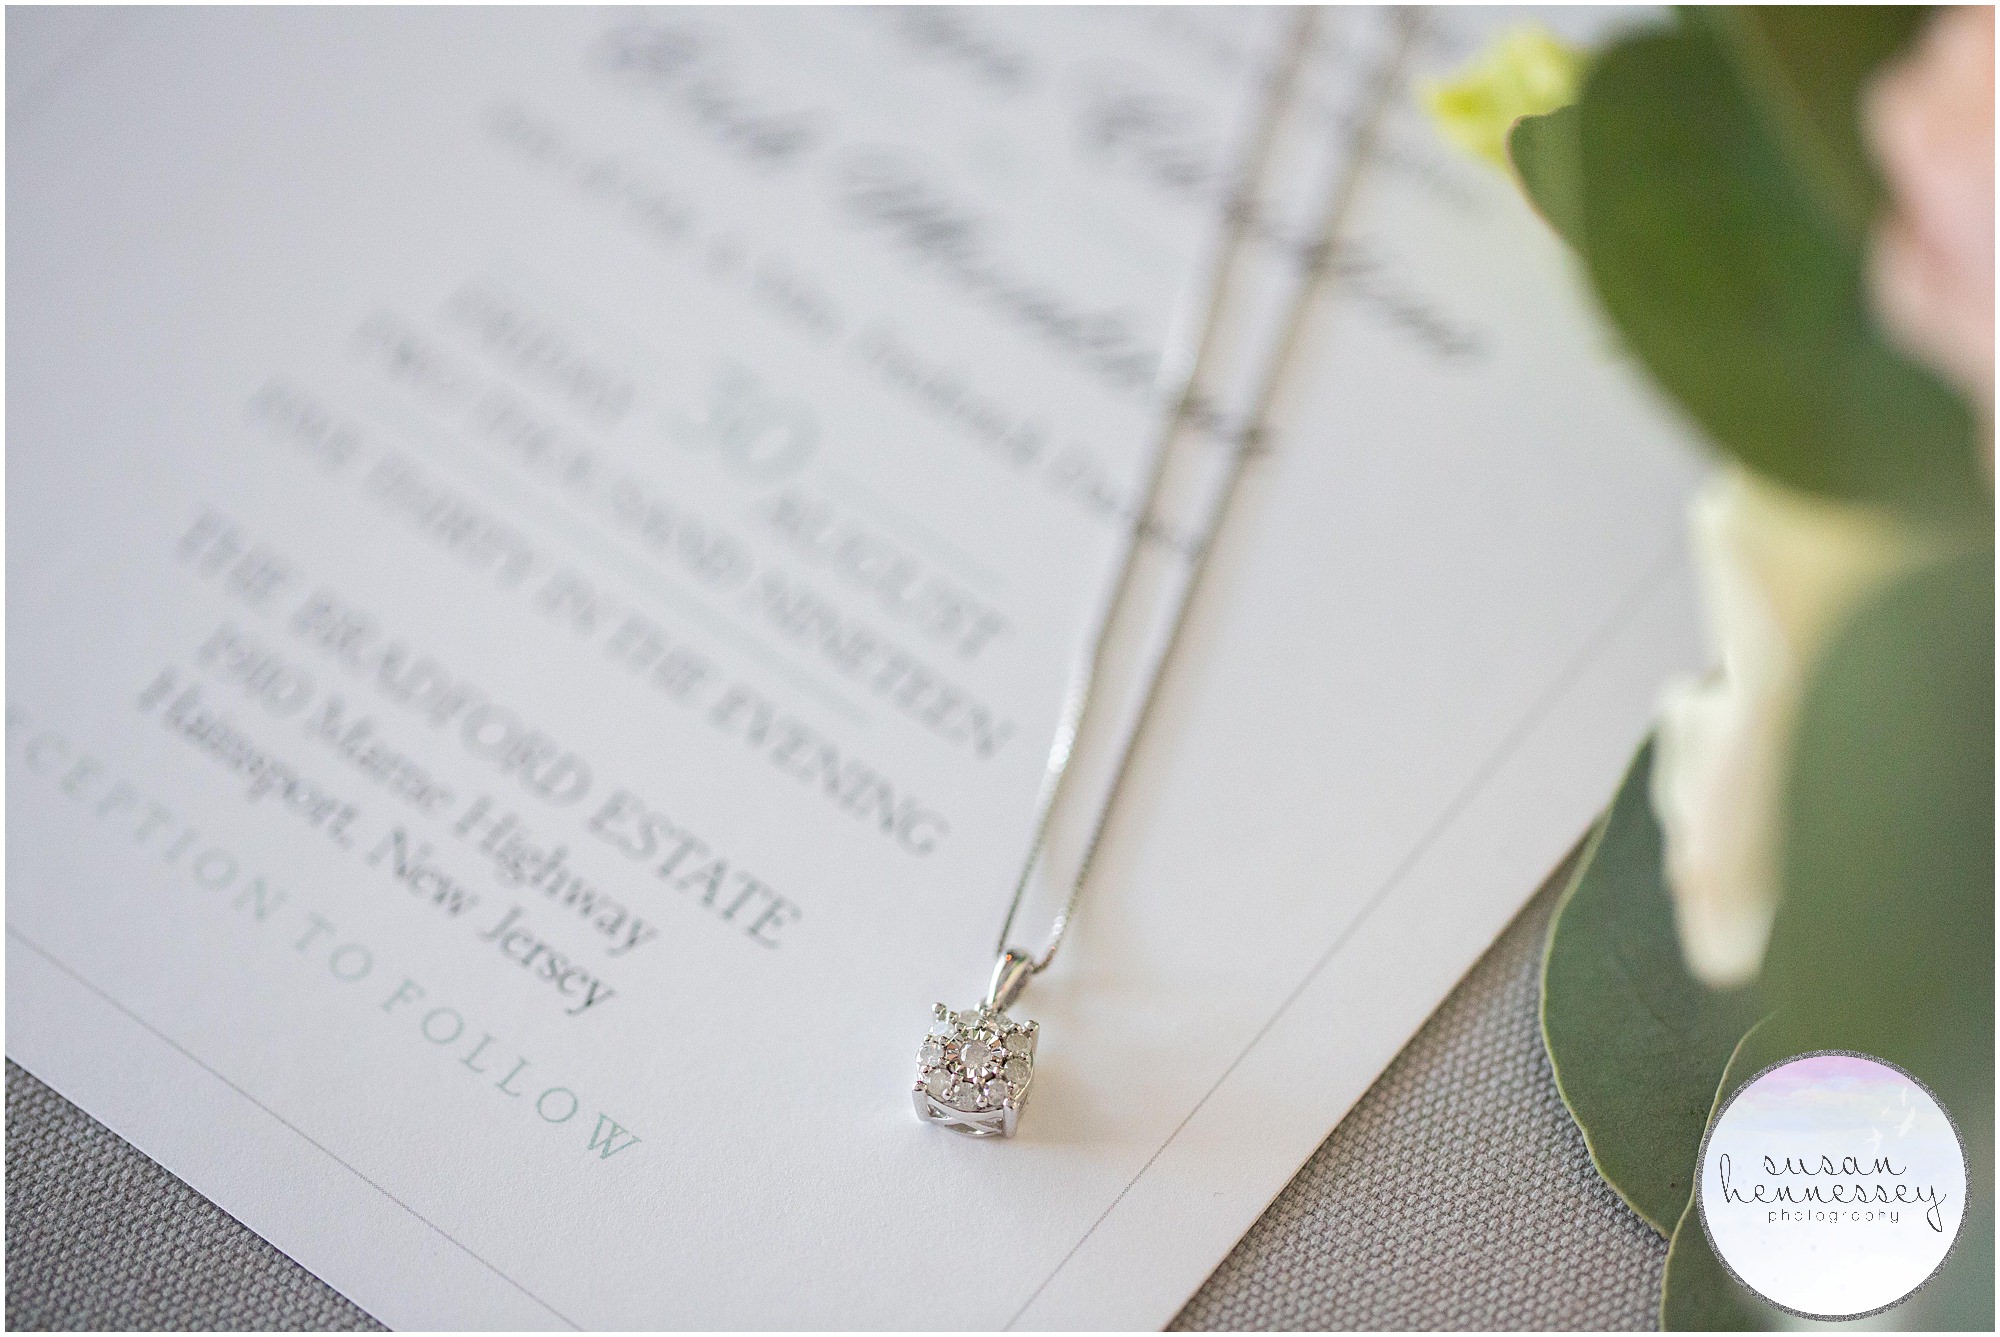 Bride's diamond necklace laying on invitation